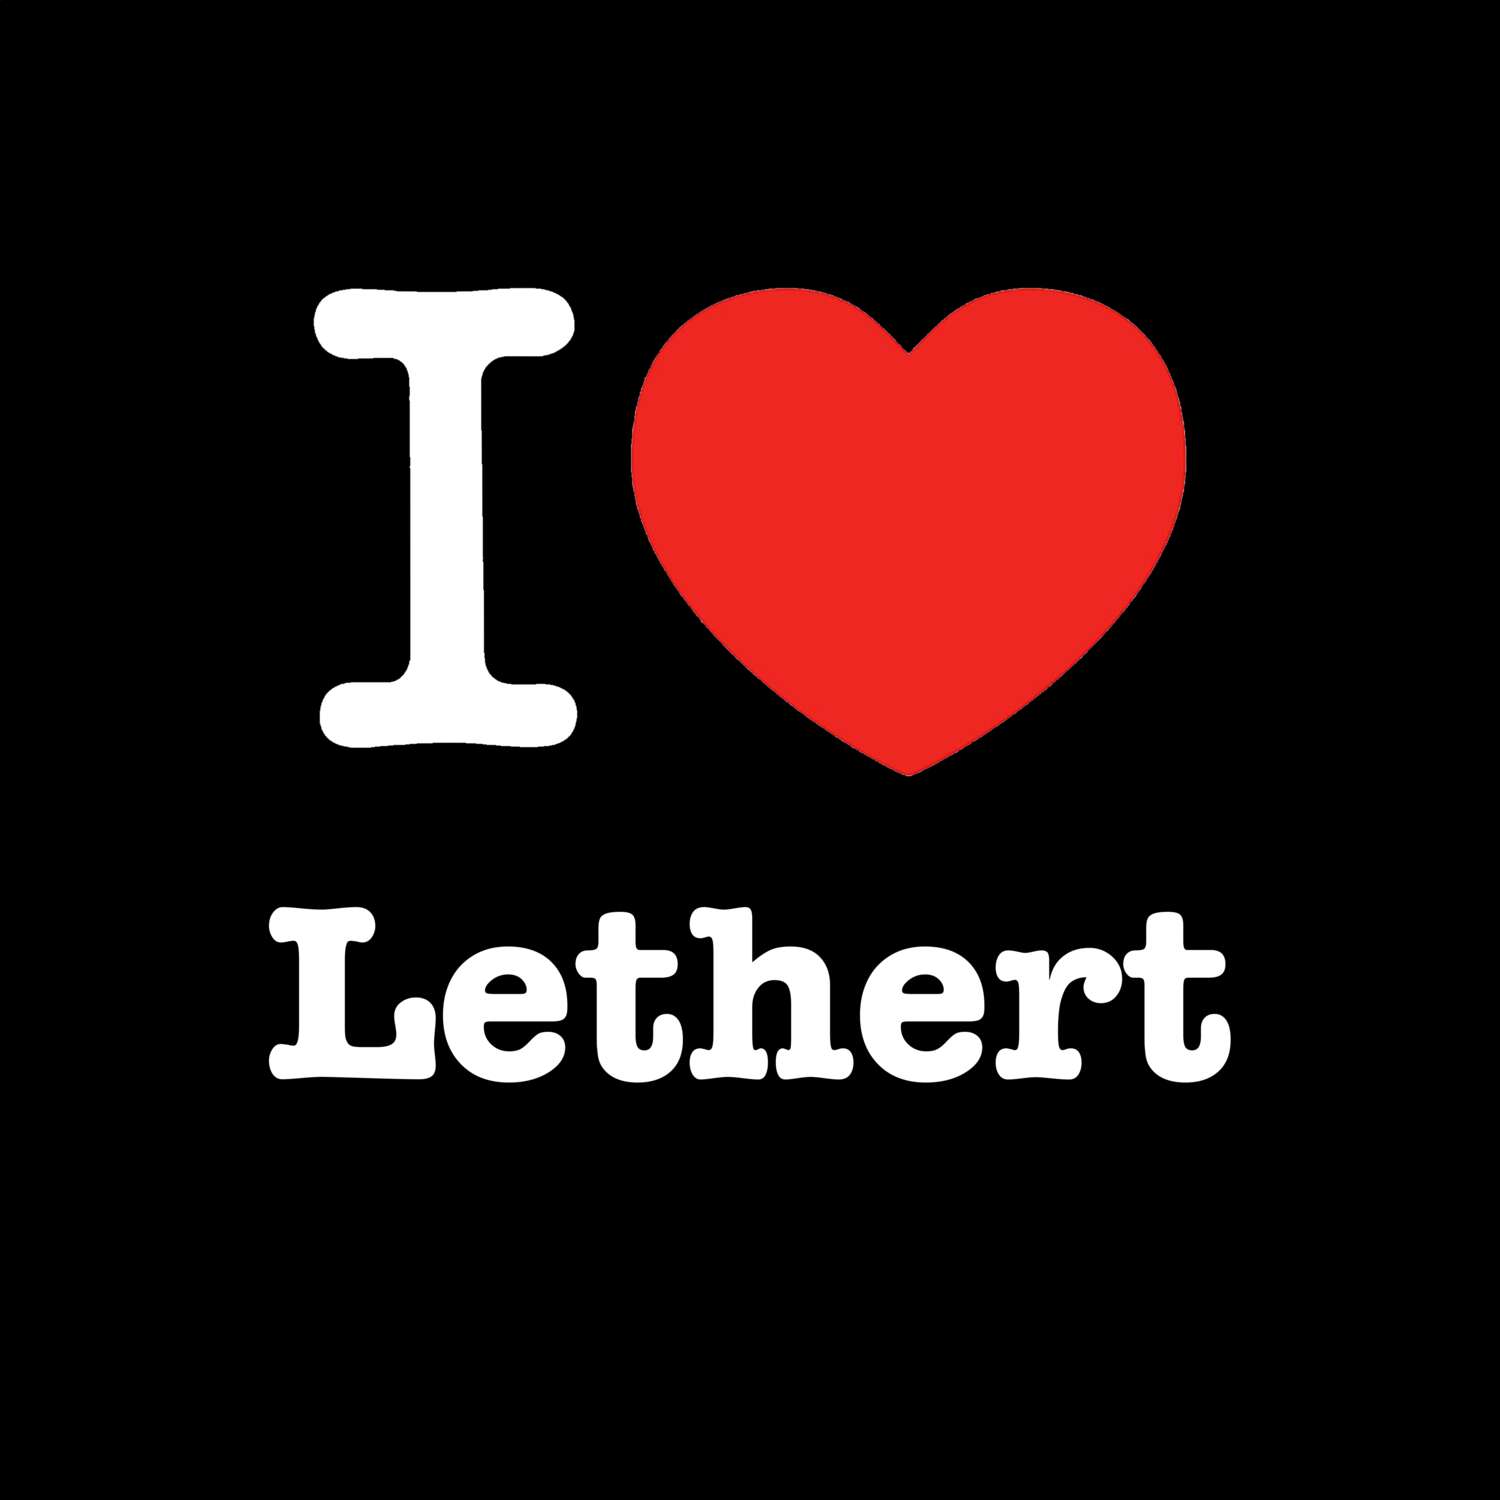 Lethert T-Shirt »I love«